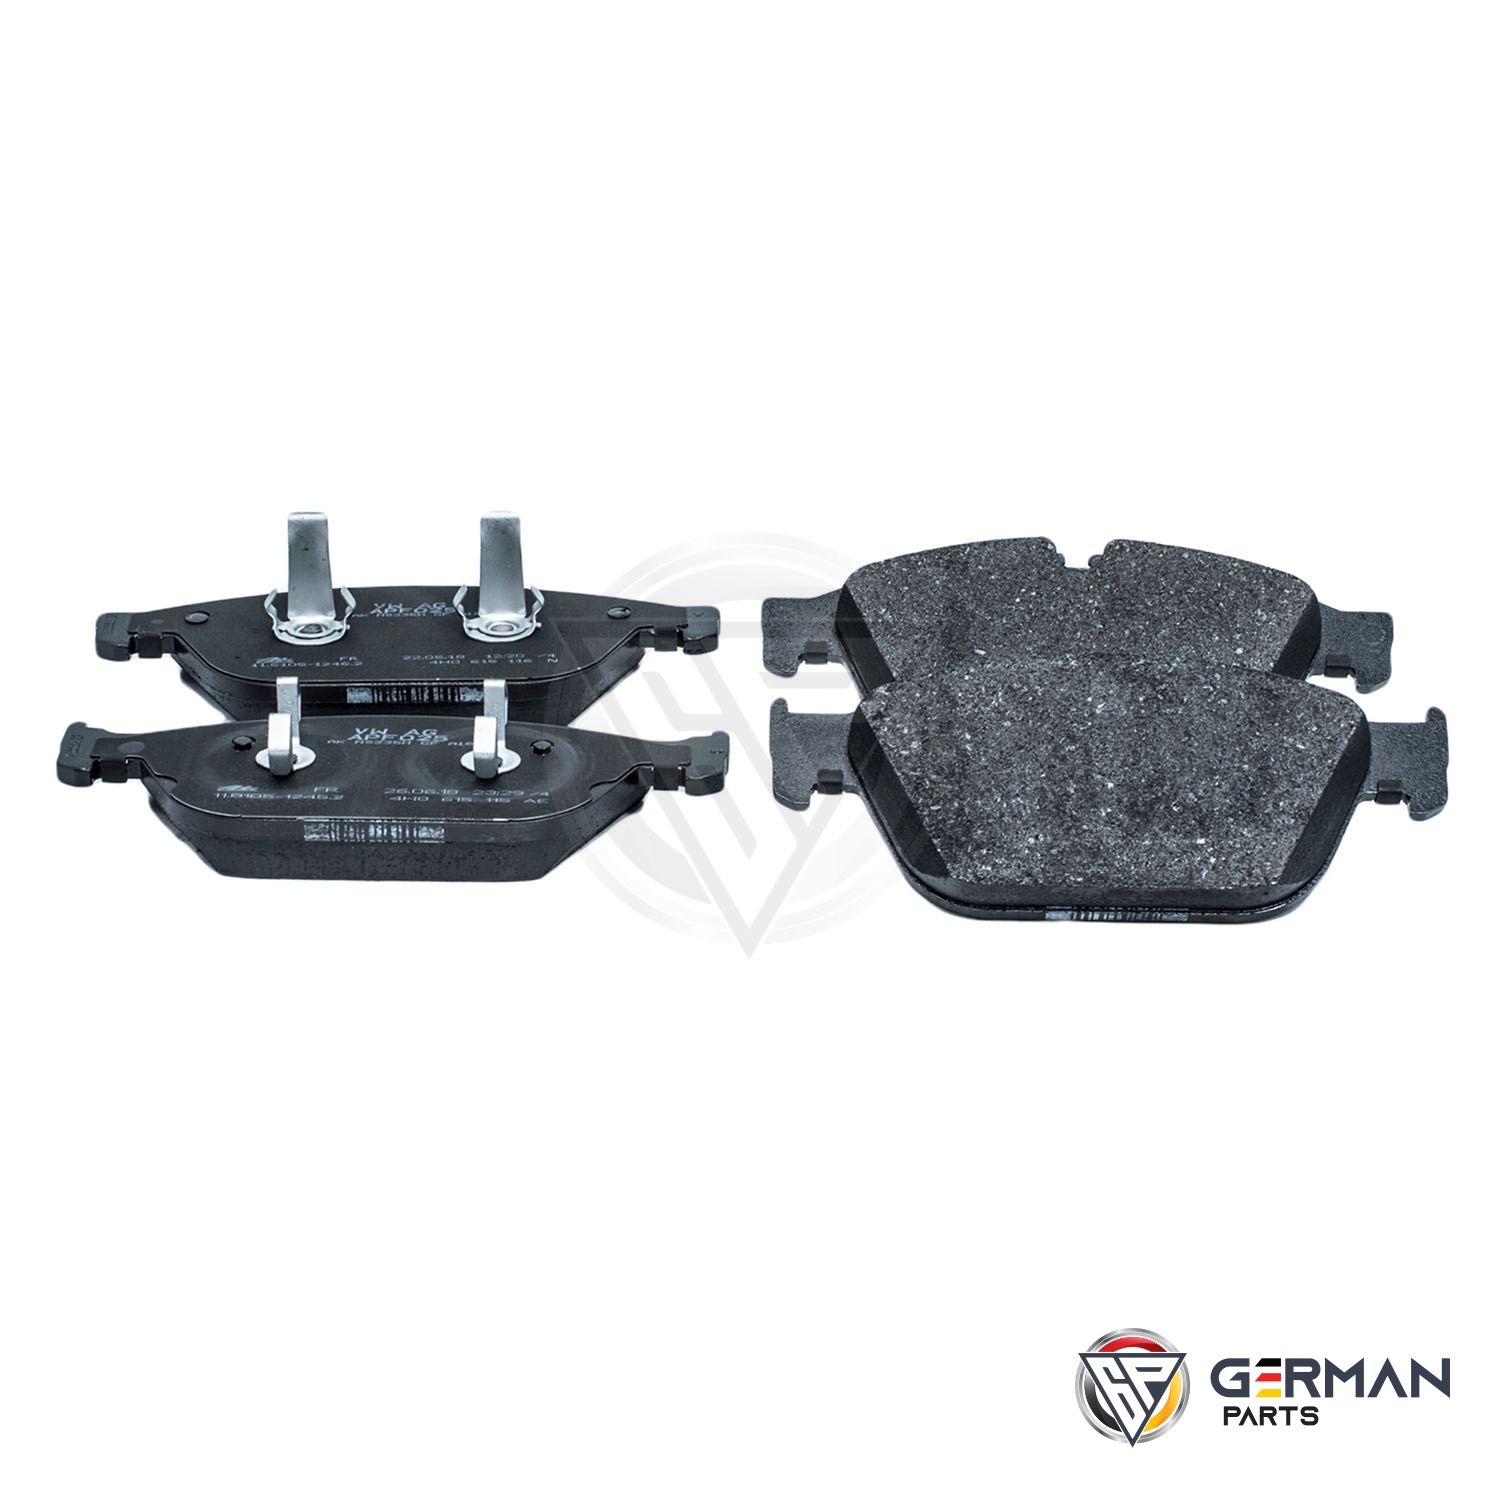 Buy Audi Volkswagen Front Brake Pad Set 4H0698151H - German Parts